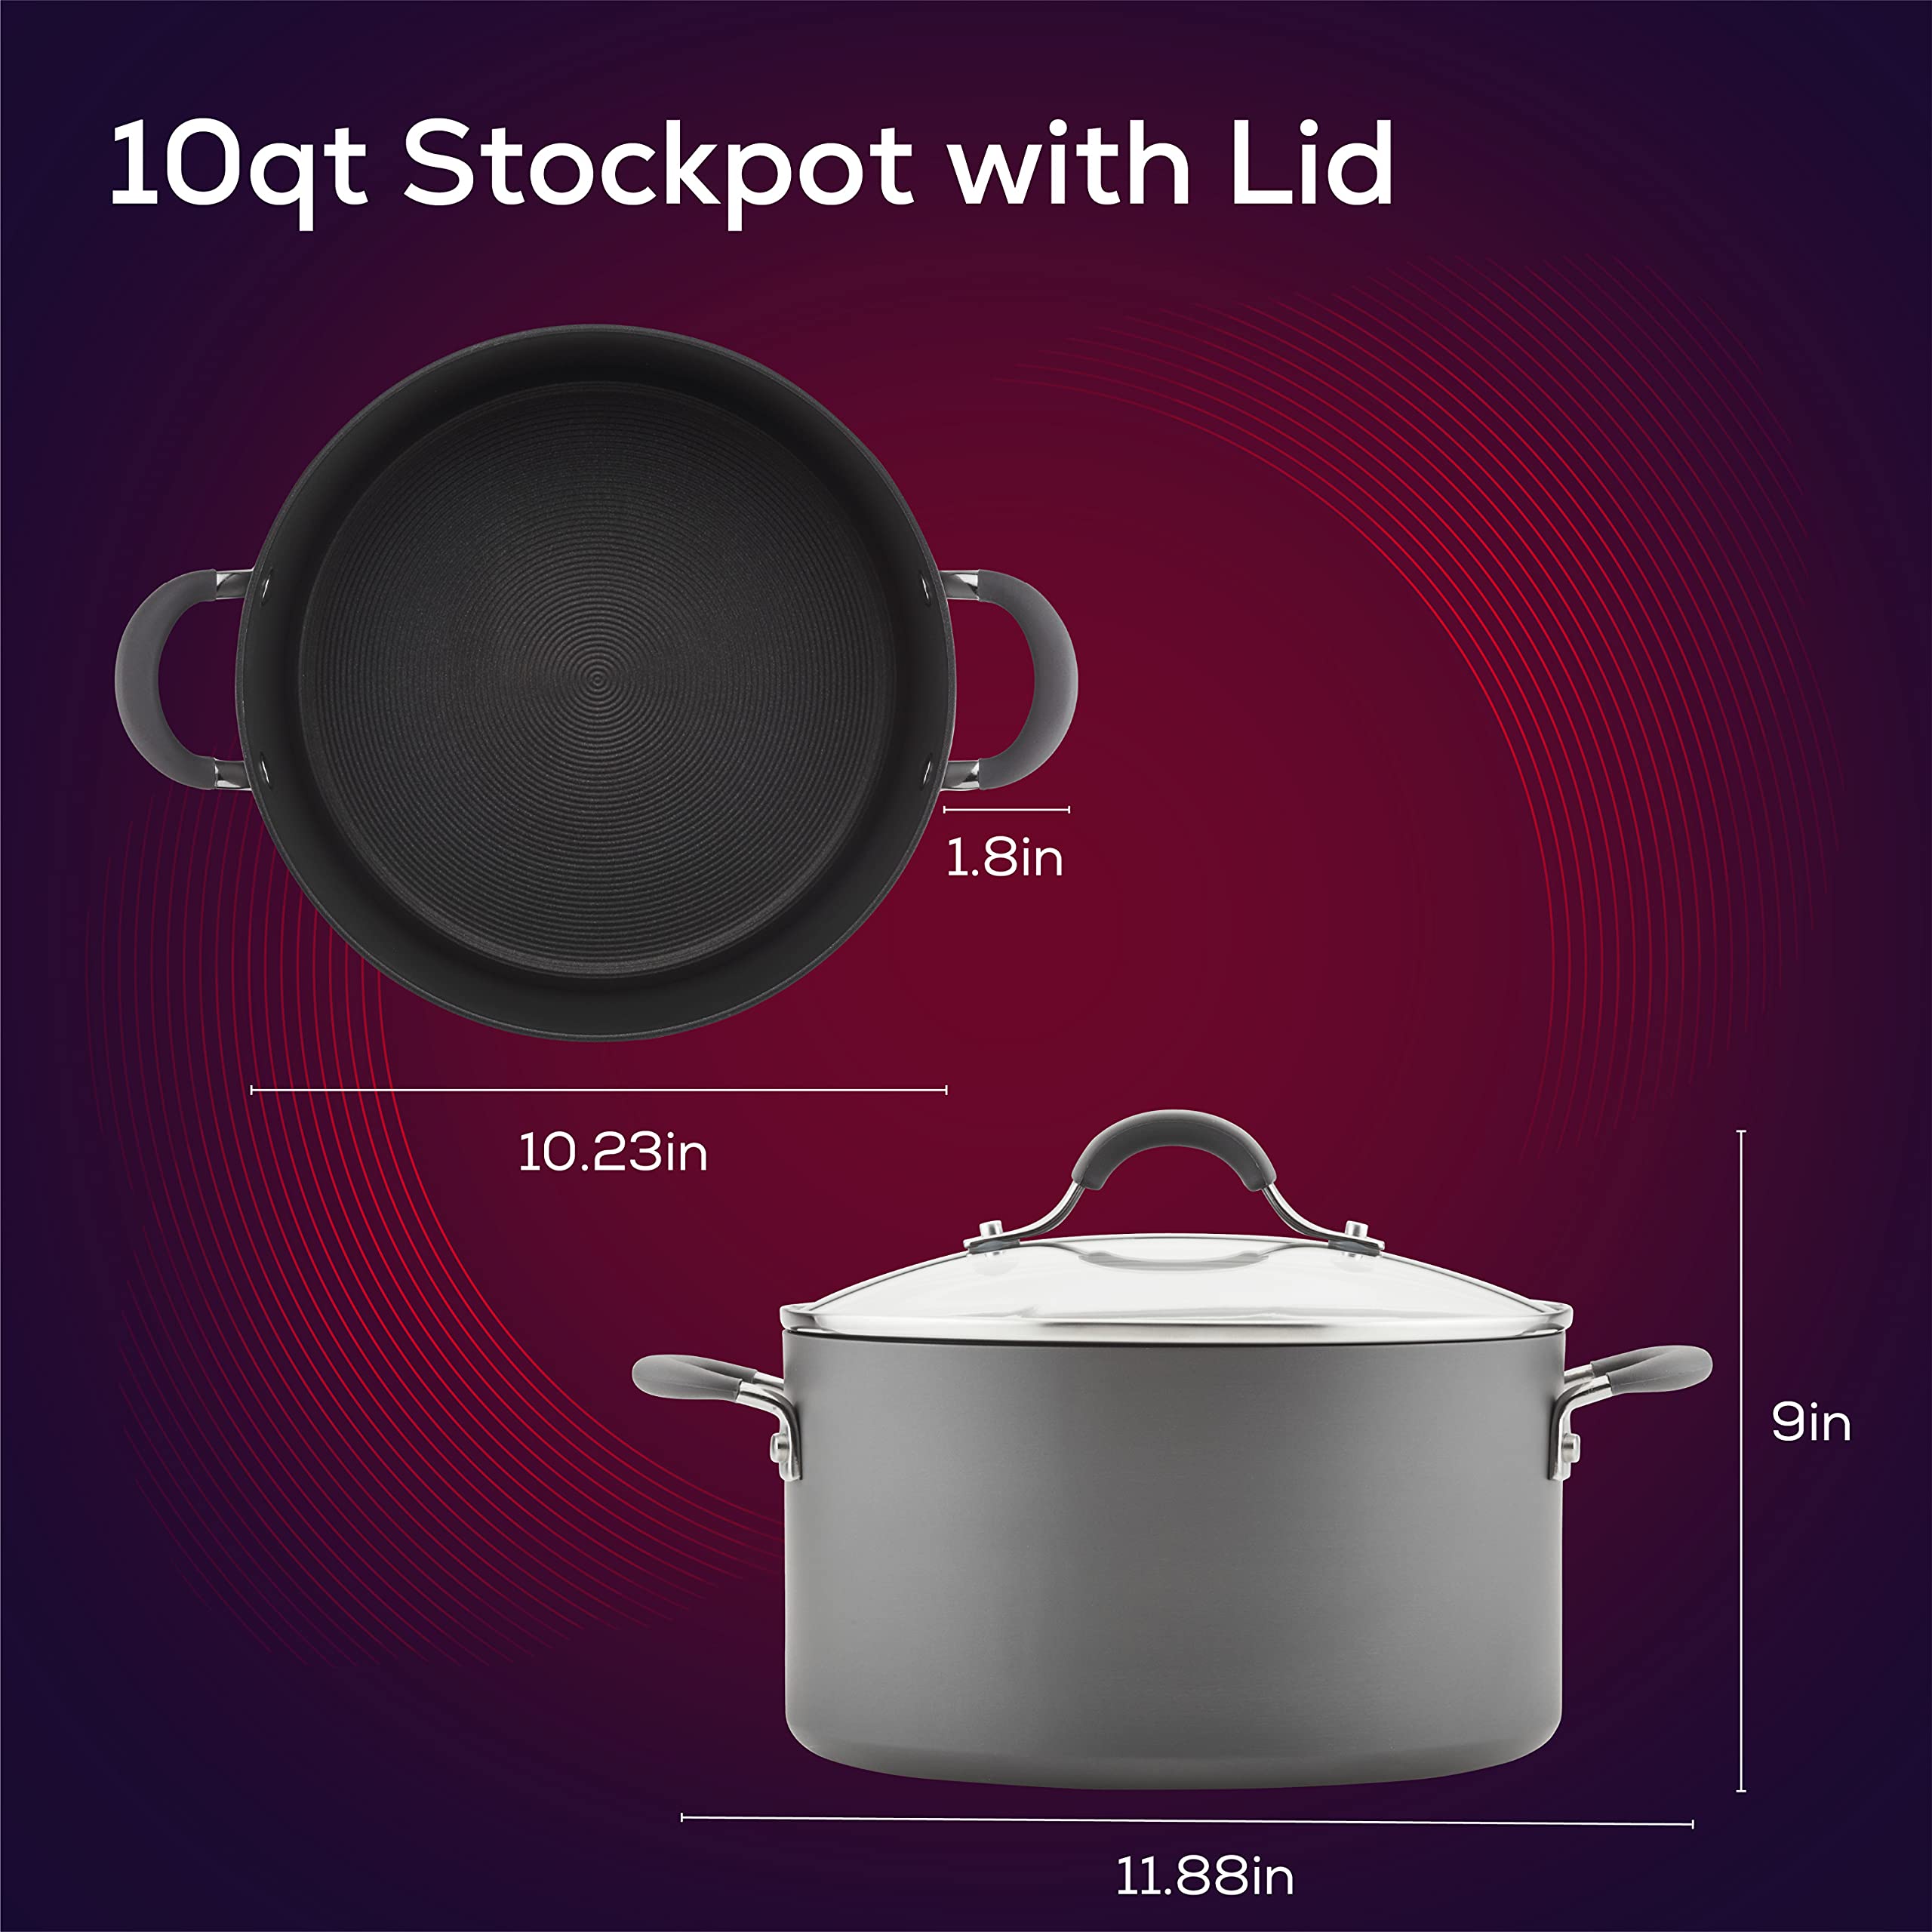 Circulon 83909 Radiance Hard Anodized Nonstick Stock Pot/Stockpot with Lid - 10 Quart, Gray